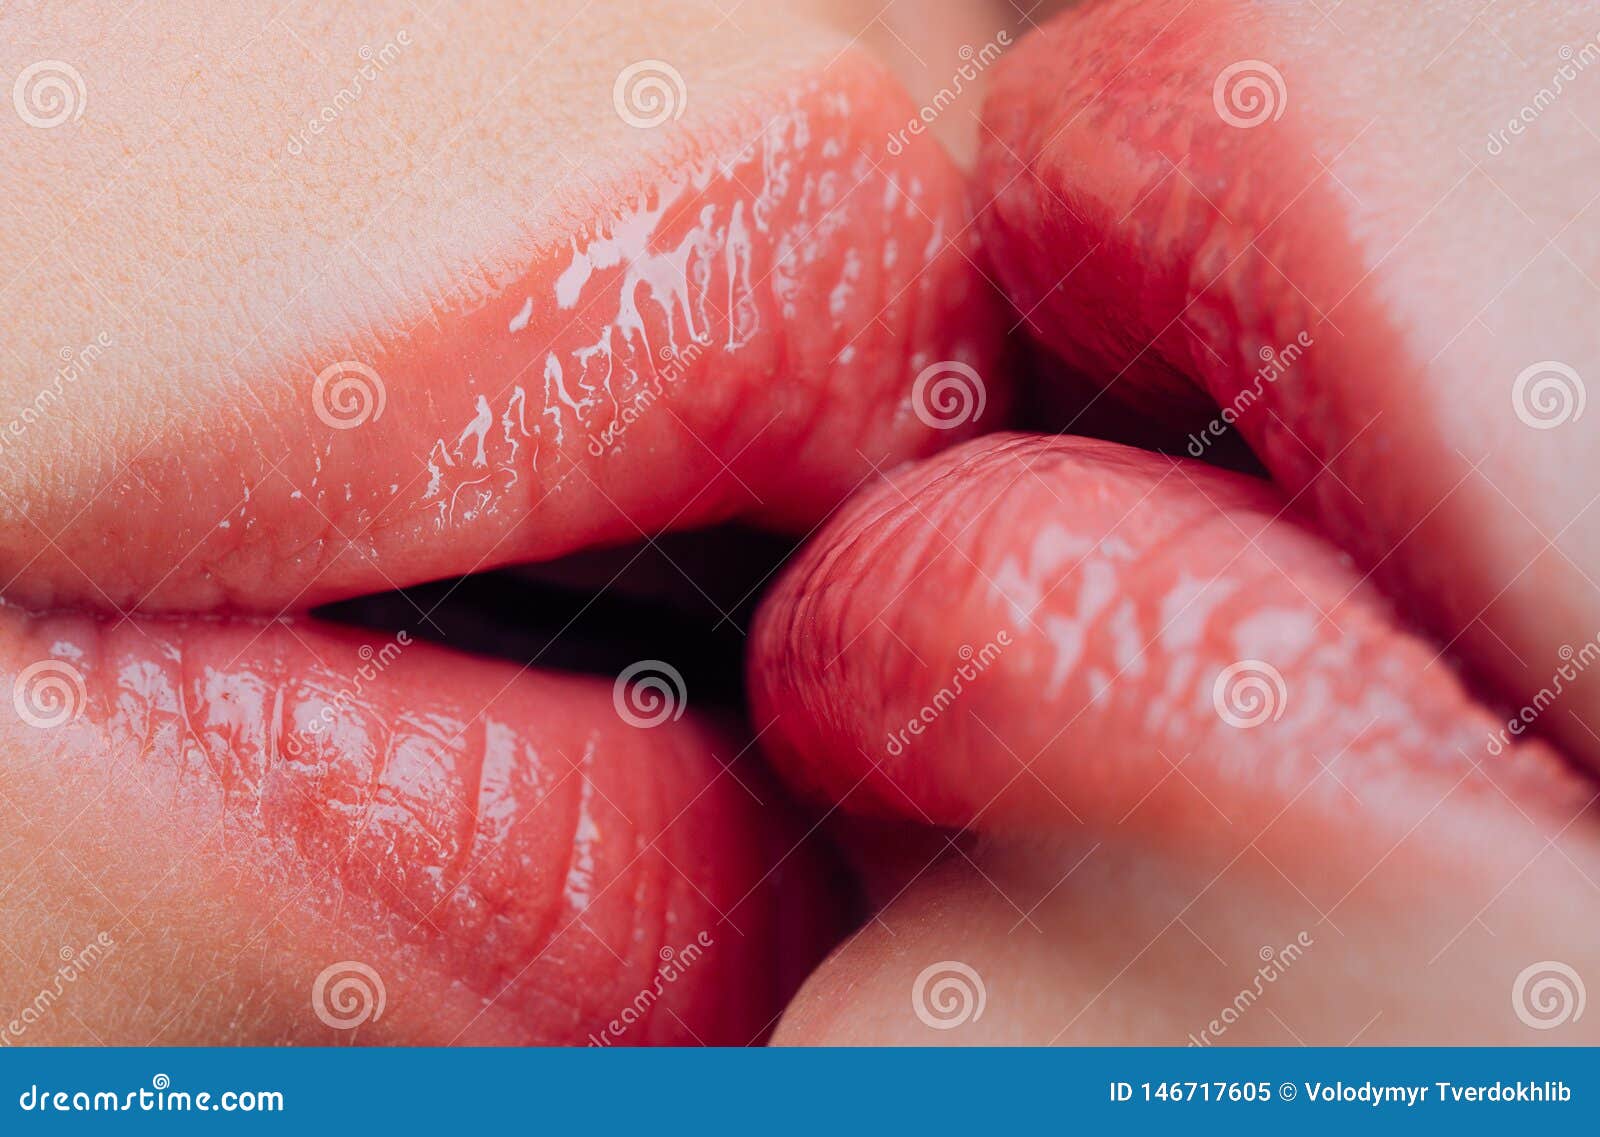 Photo about kissing, love, lipstick, couple, lips - 146717605.